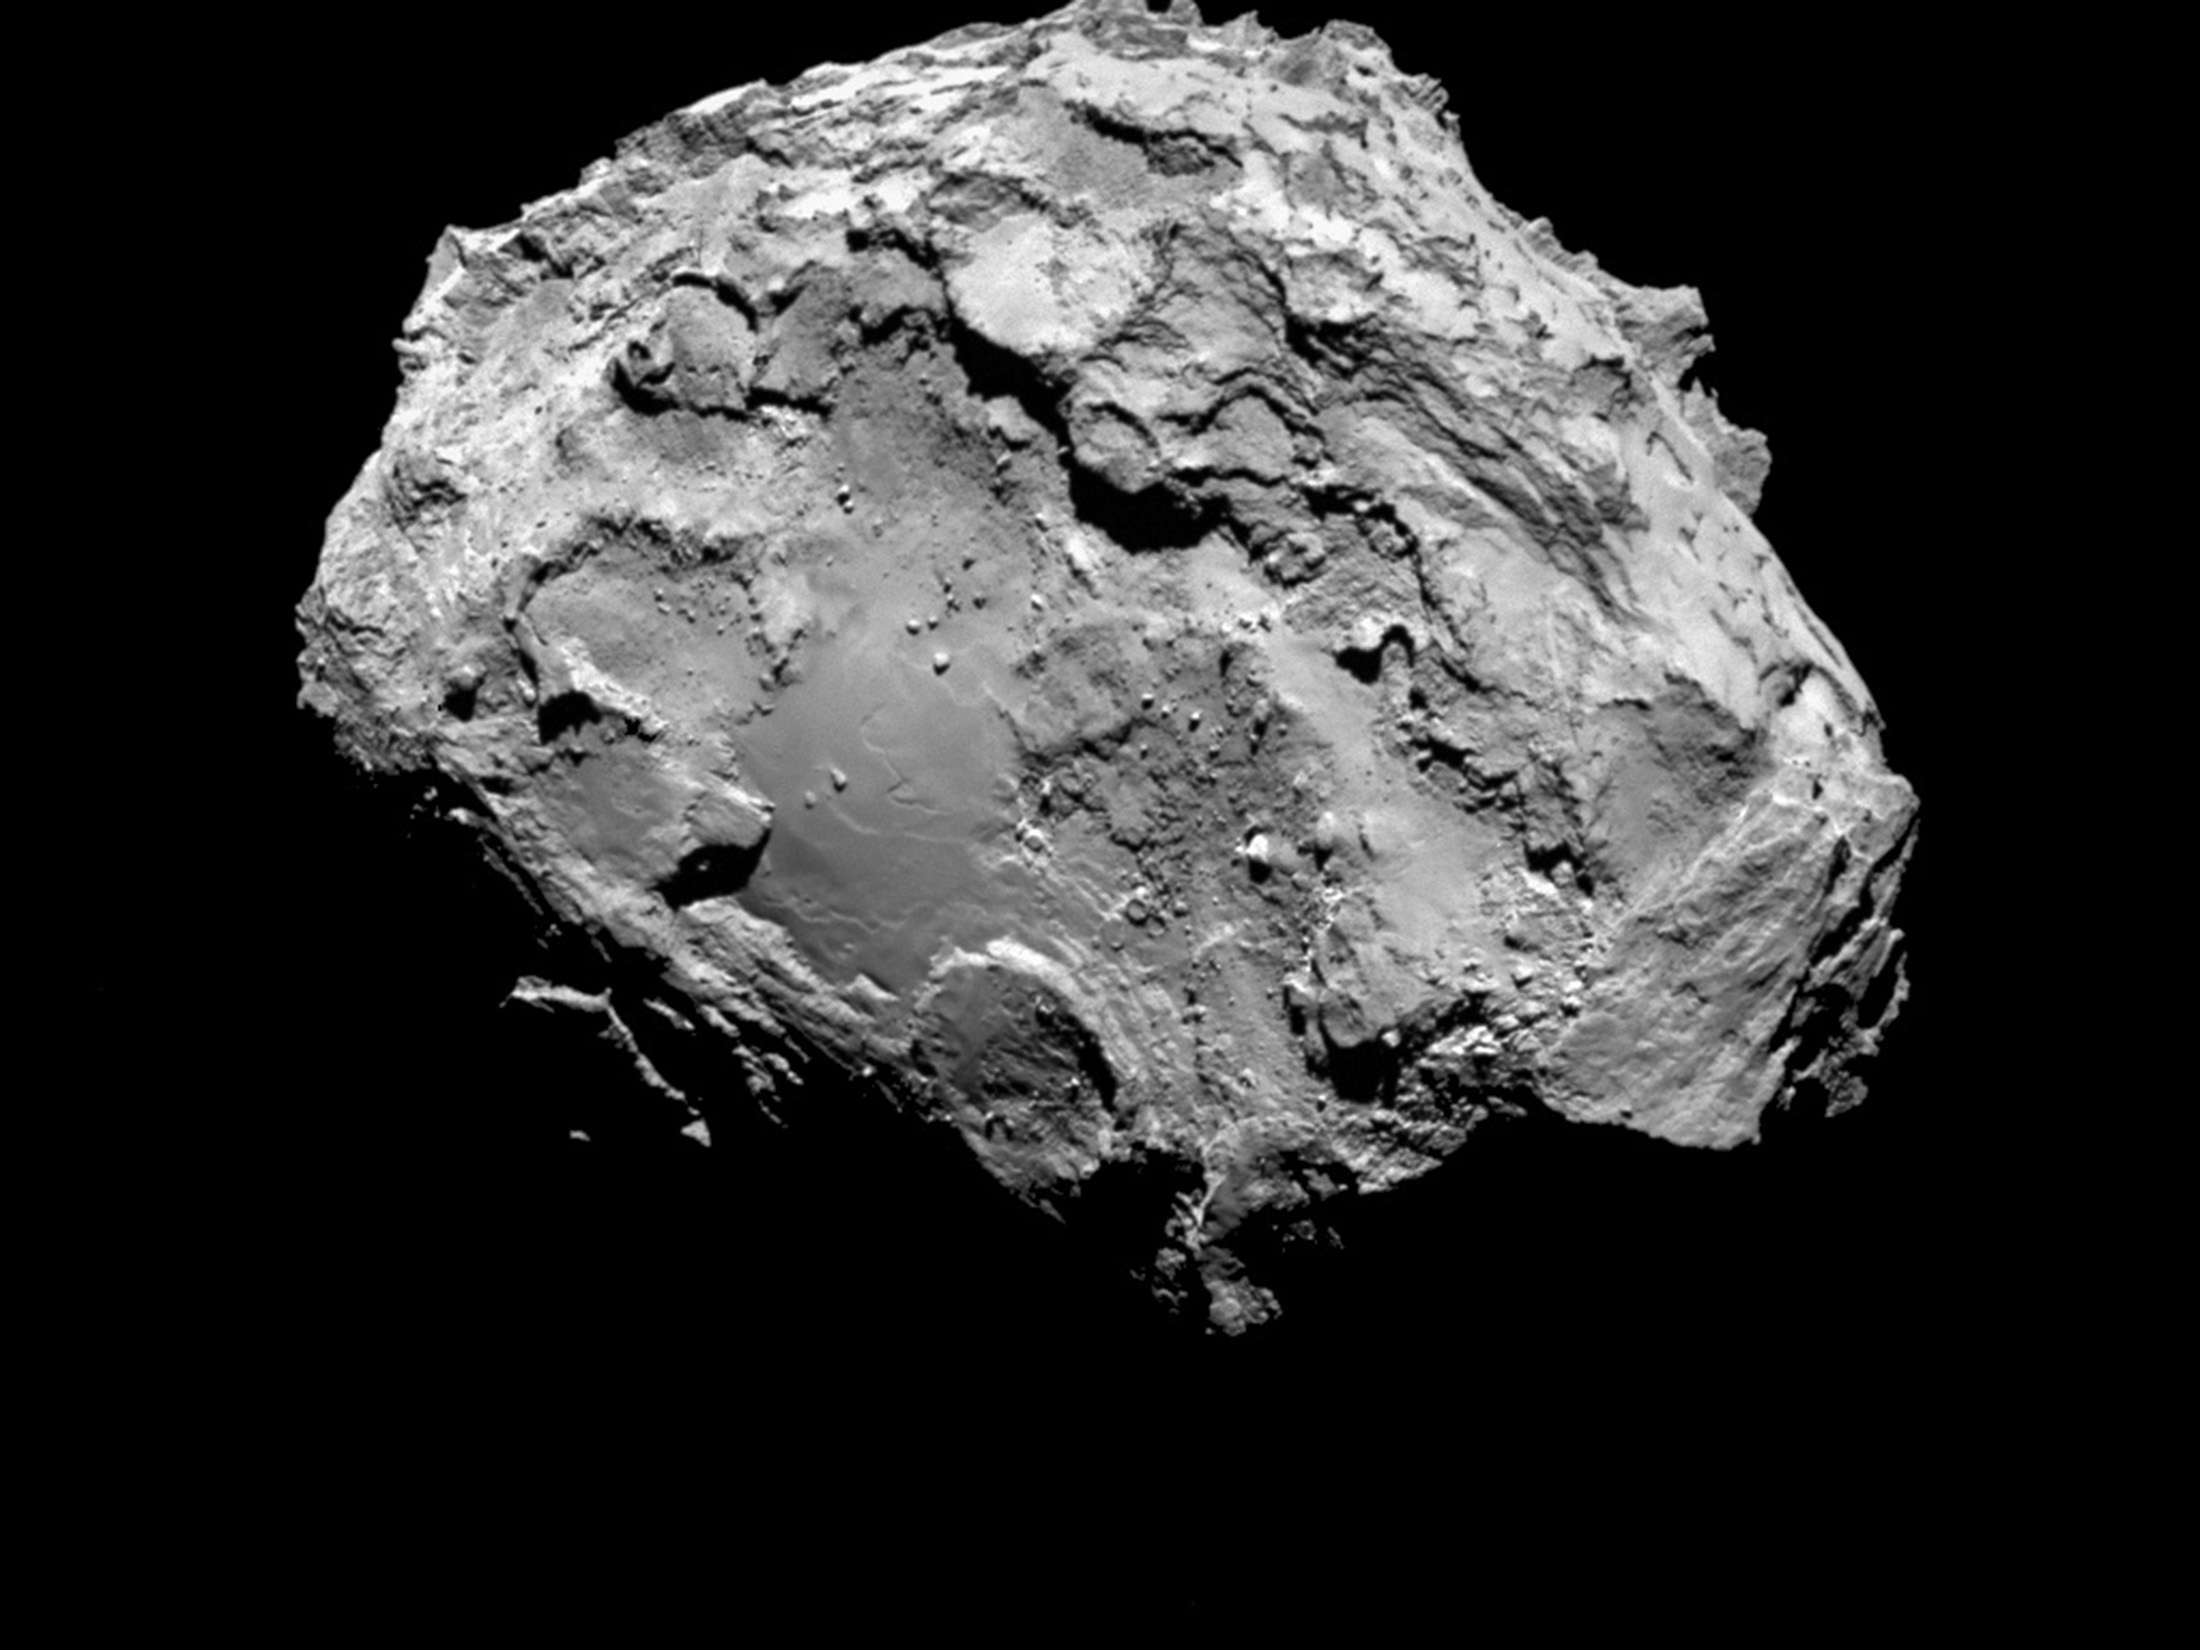 A handout photo of comet 67P/Churyumov-Gerasimenko by Rosetta?s OSIRIS narrow-angle camera